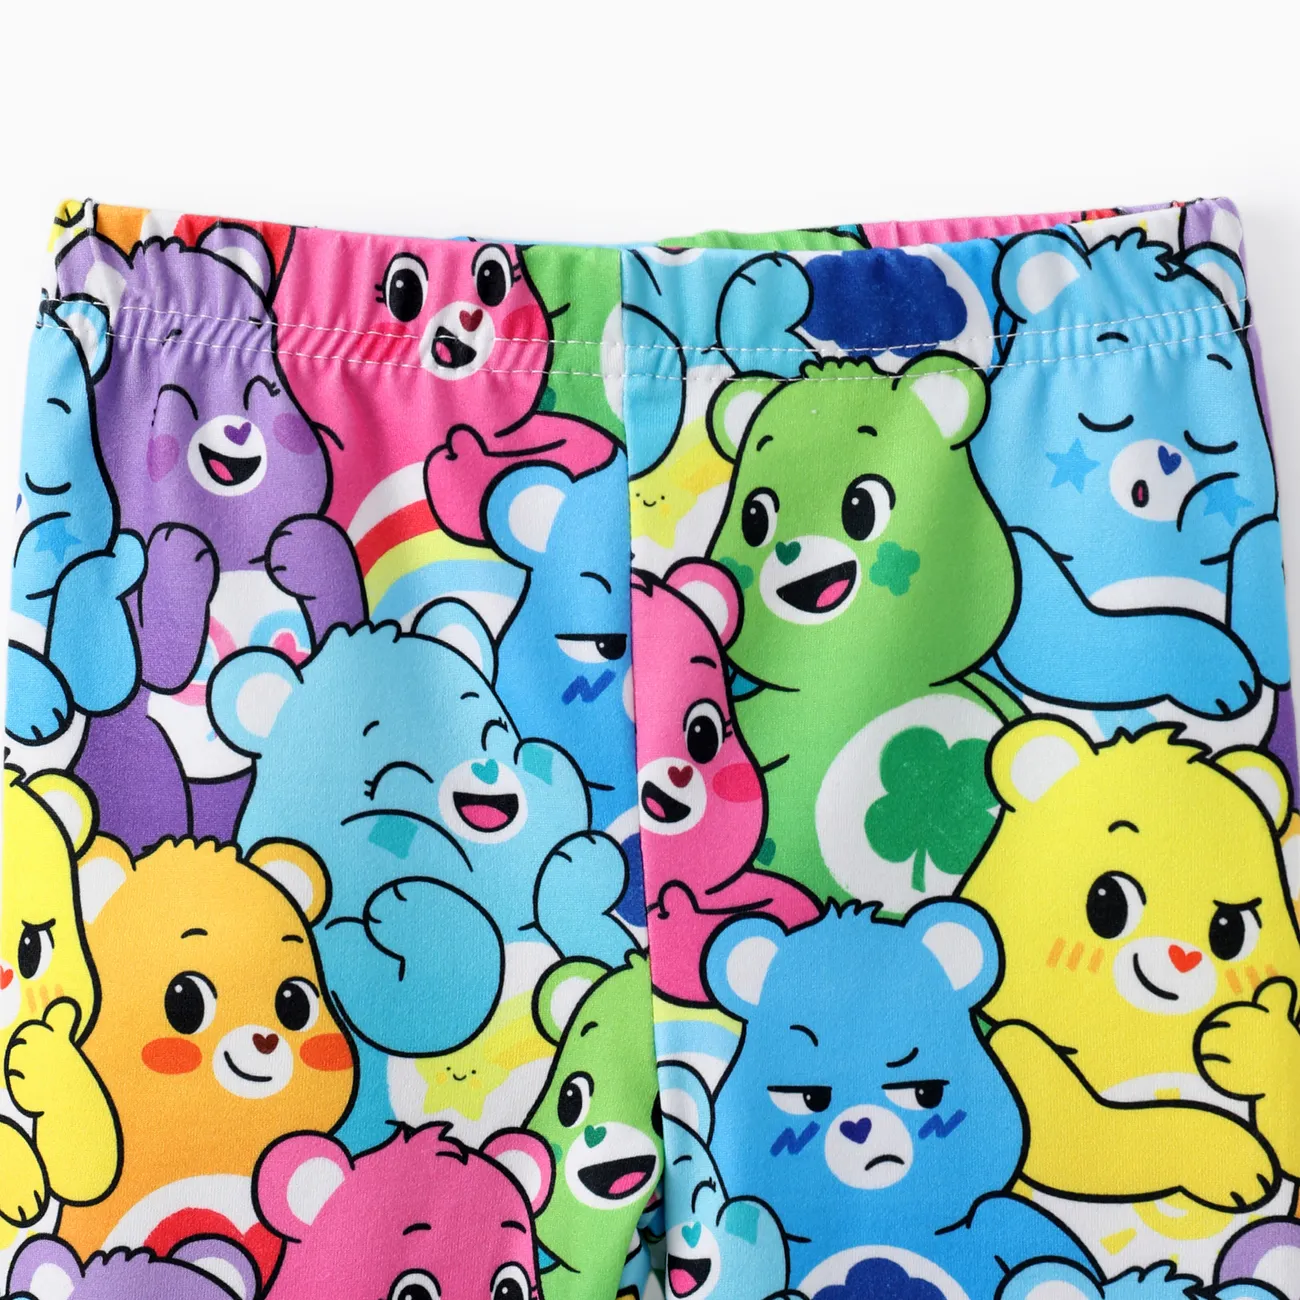 Care Bears Toddler Girls 2pcs Character Hear-pattern Print Ruffle-hem Top with Pants Set Multi-color big image 1